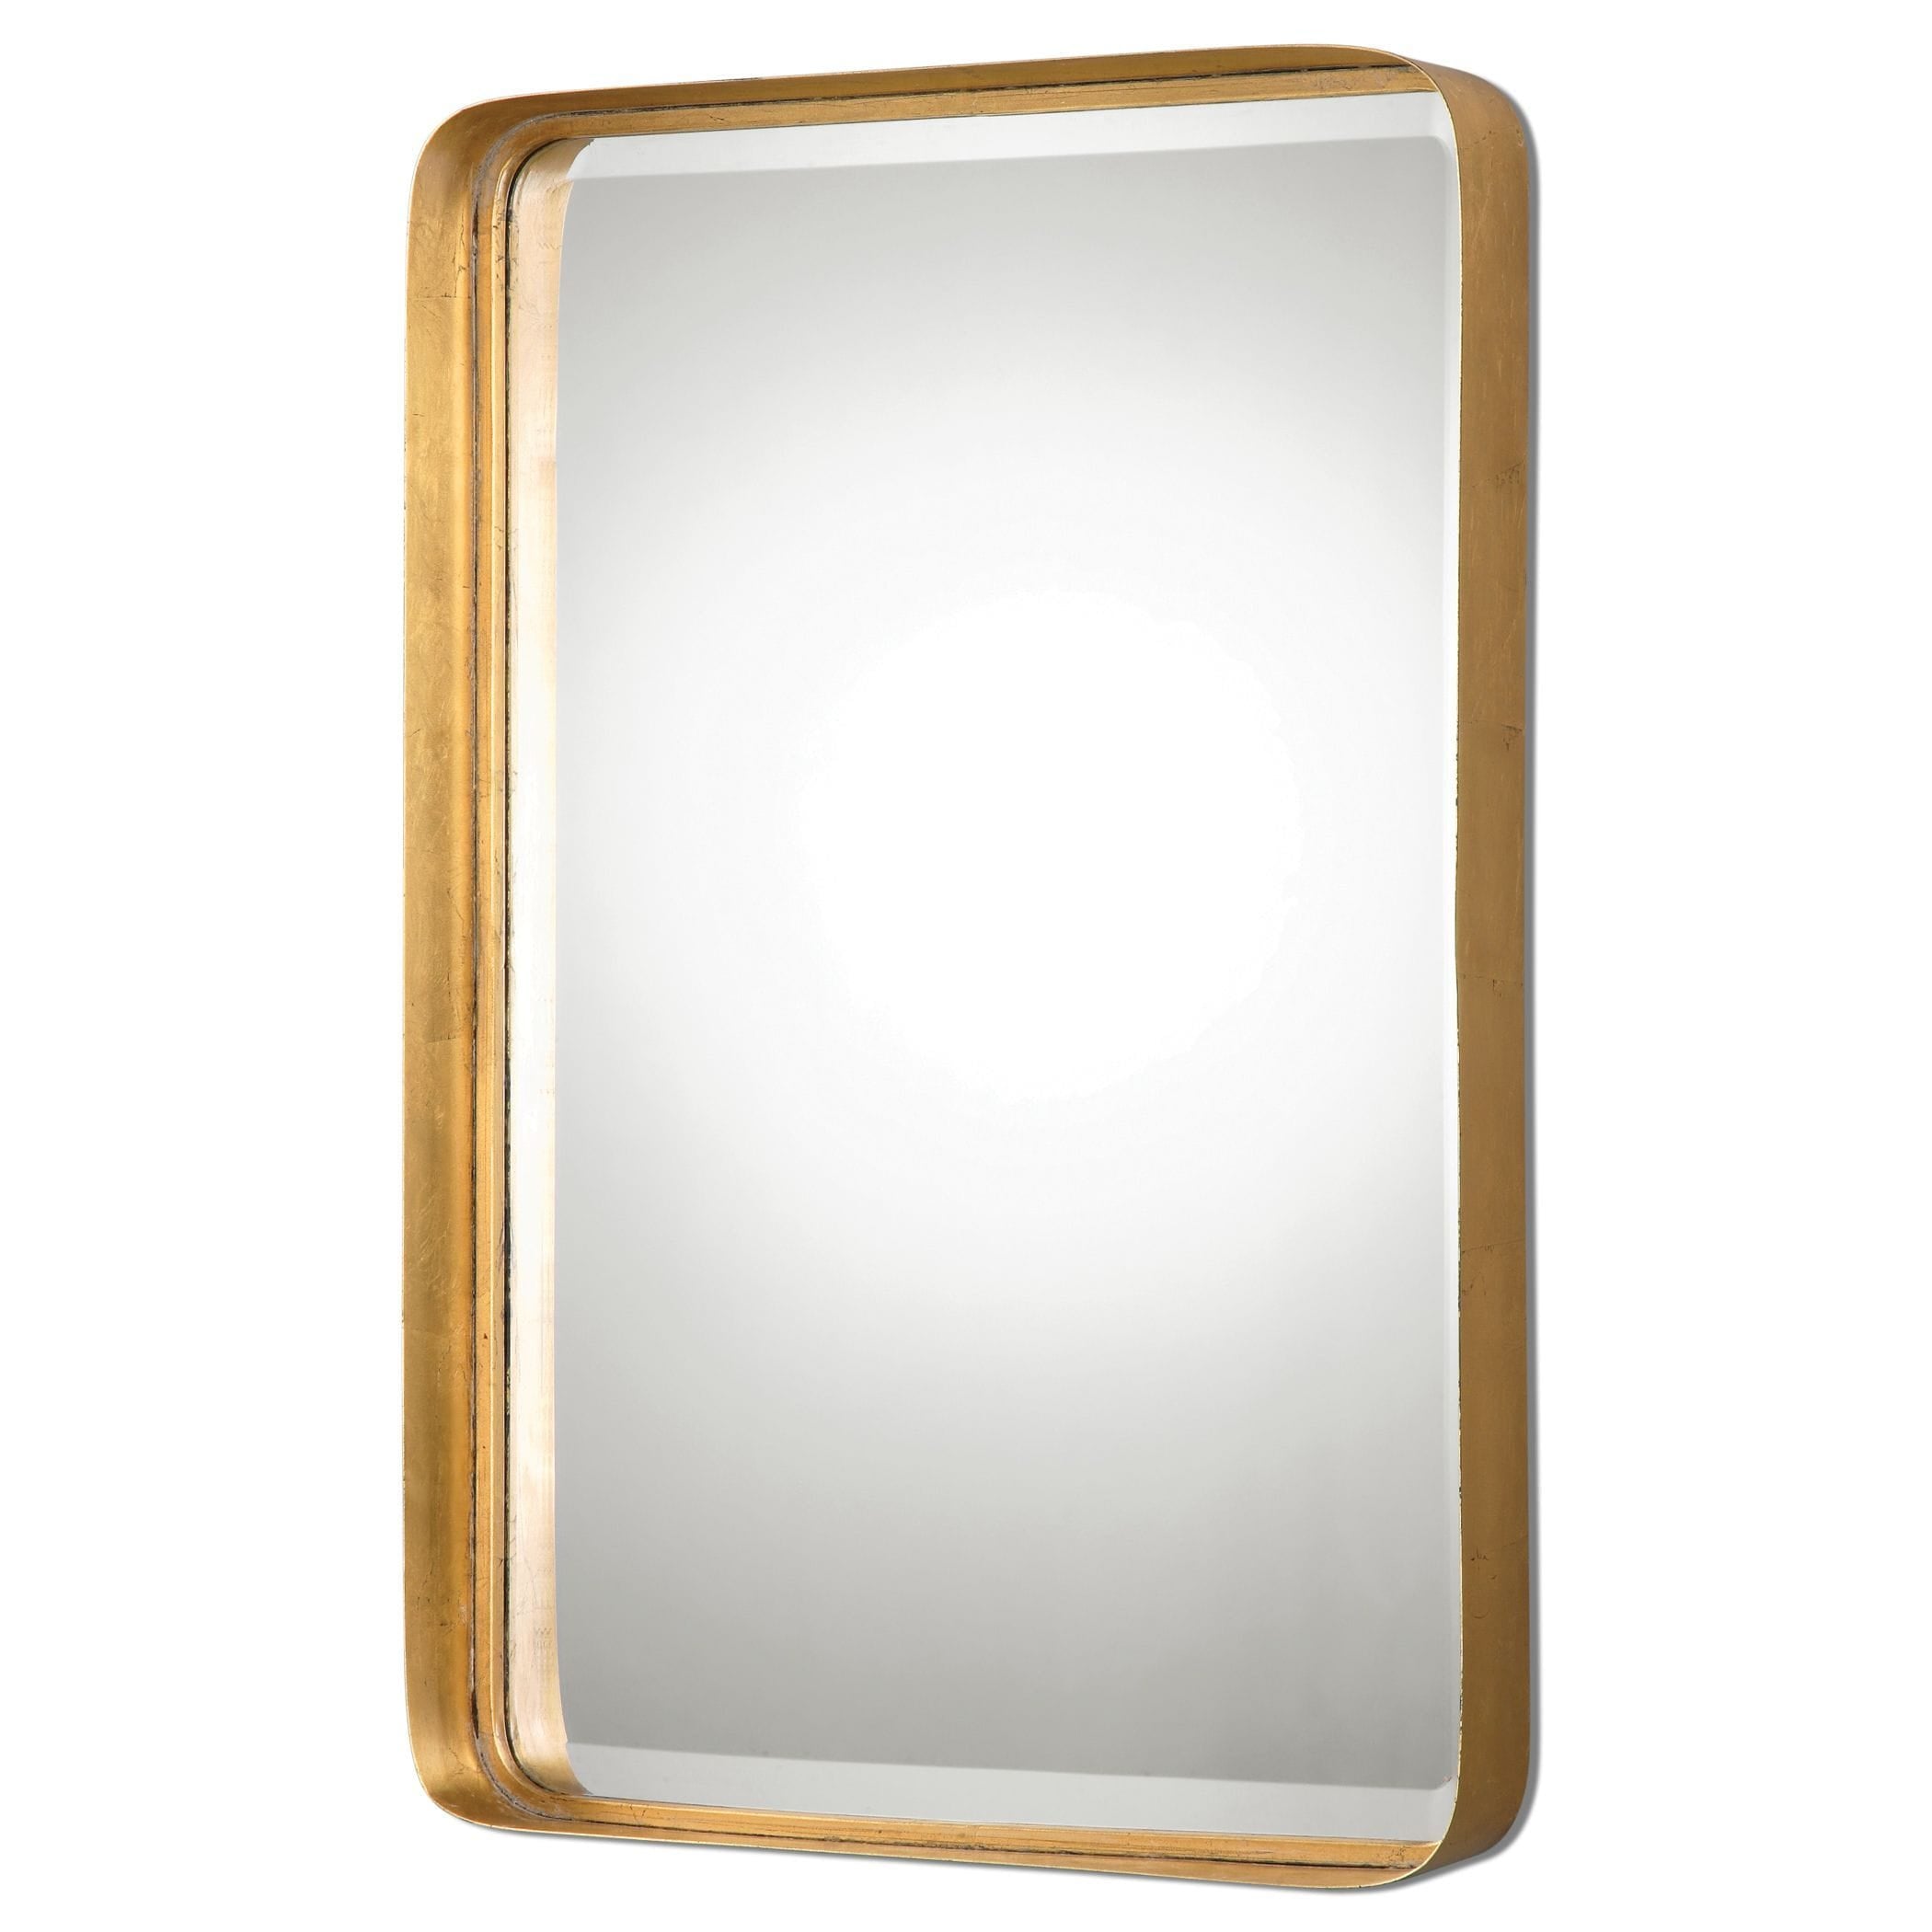 Crofton Gold Vanity Mirror Uttermost